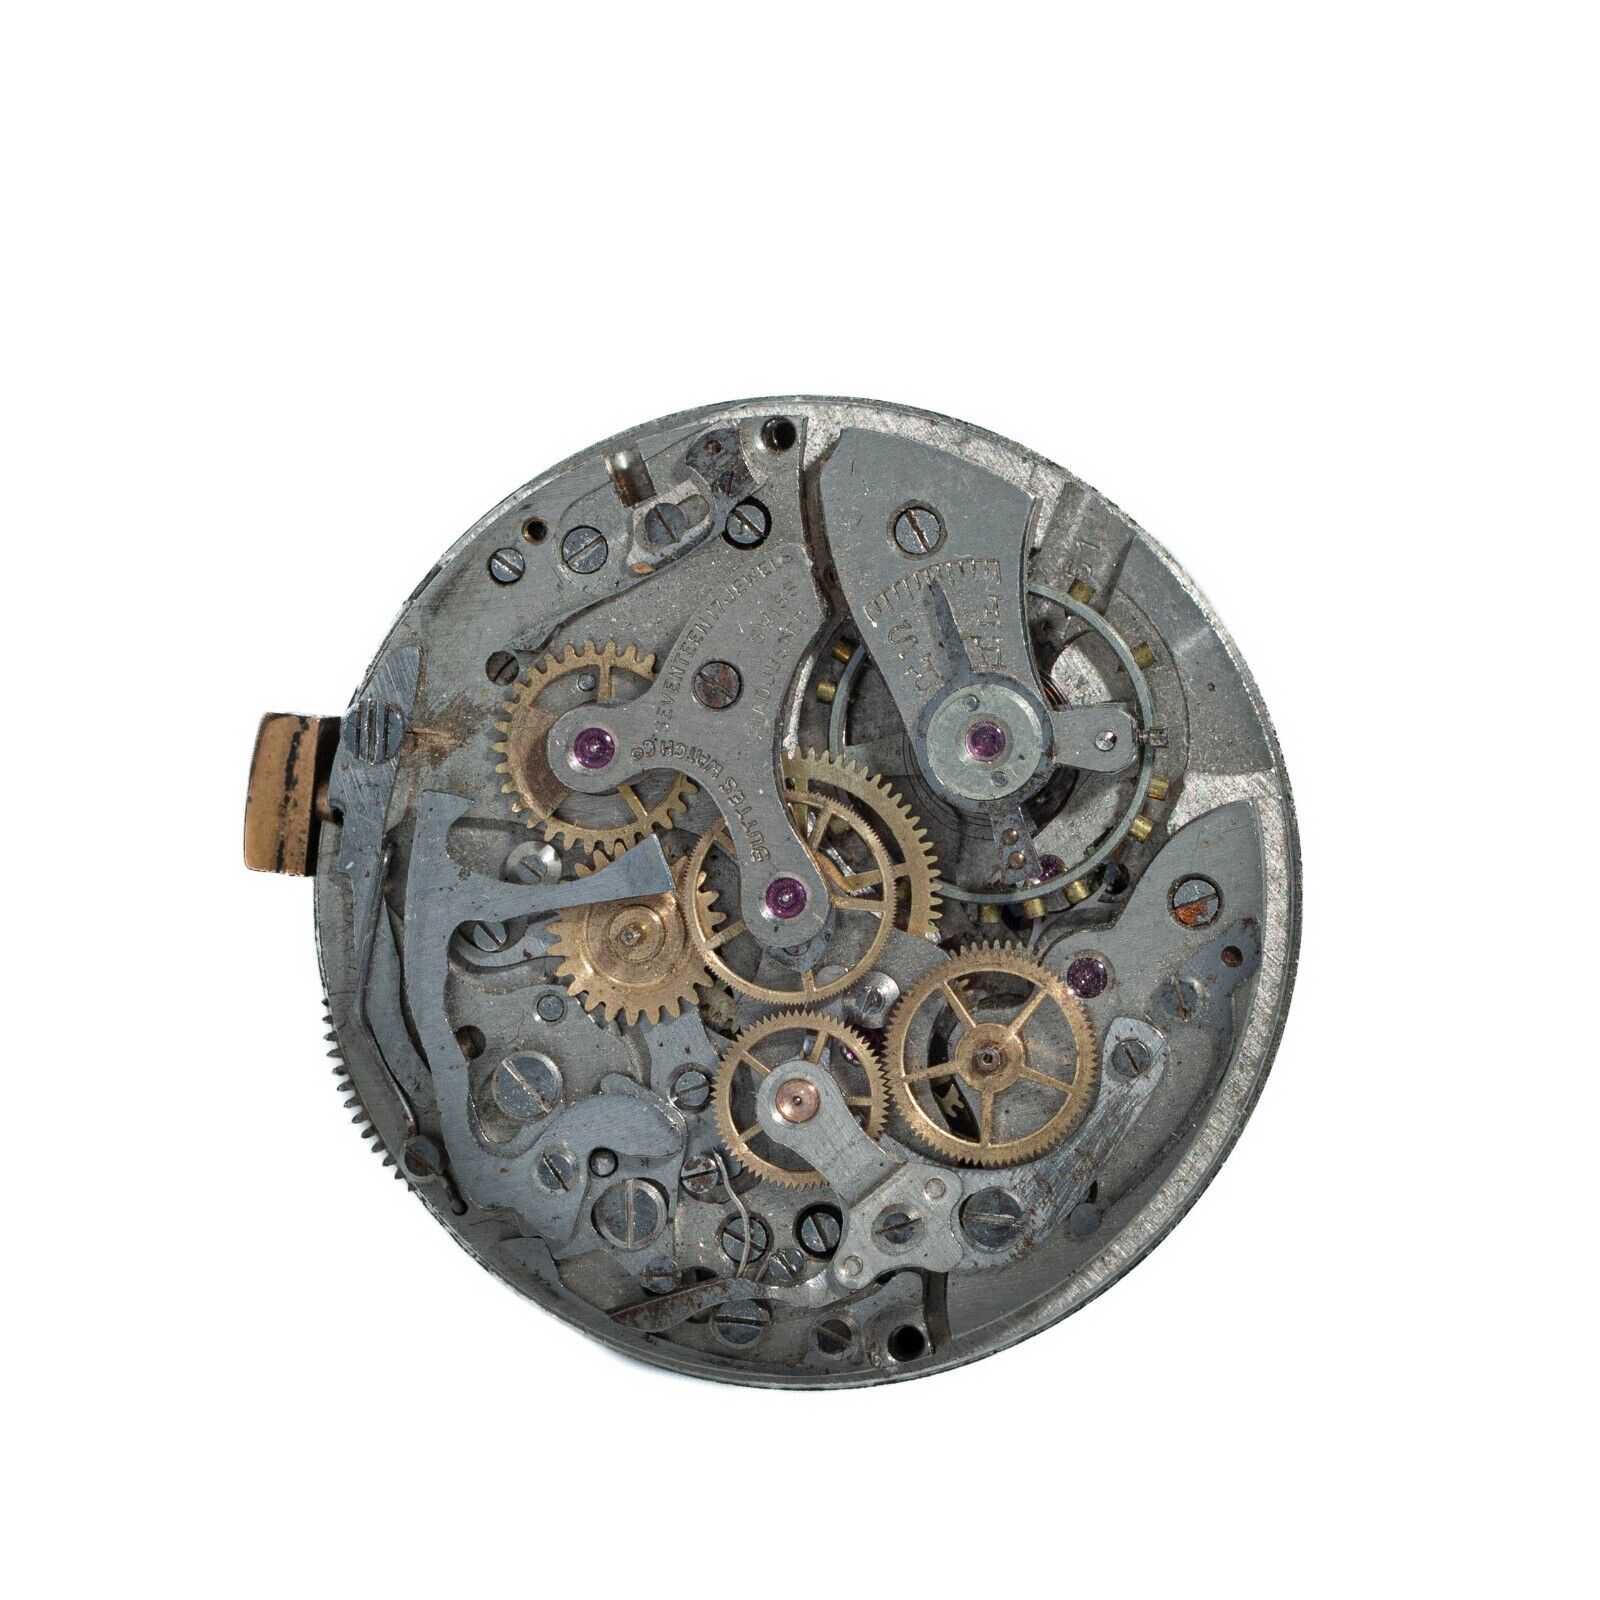 Butex Landeron Caliber 51 Swiss 17 Jewels Manual Wind Chronograph Watch Movement Gallery Image 0